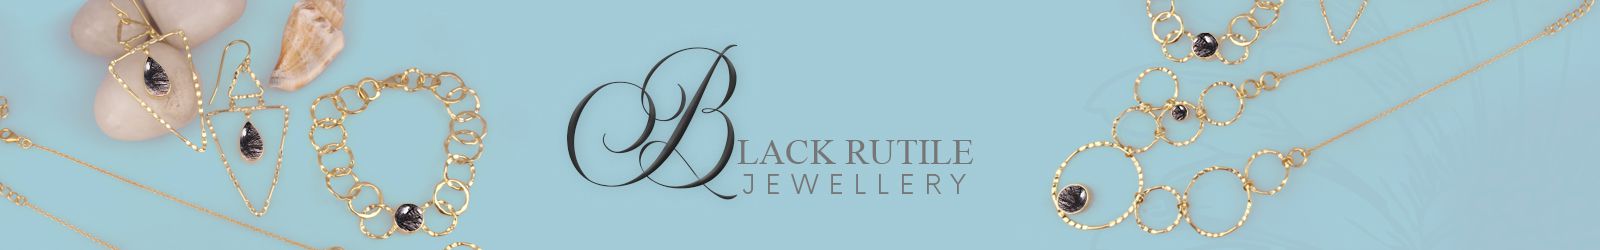 Silver Black Rutile Jewelry Wholesale Supplier